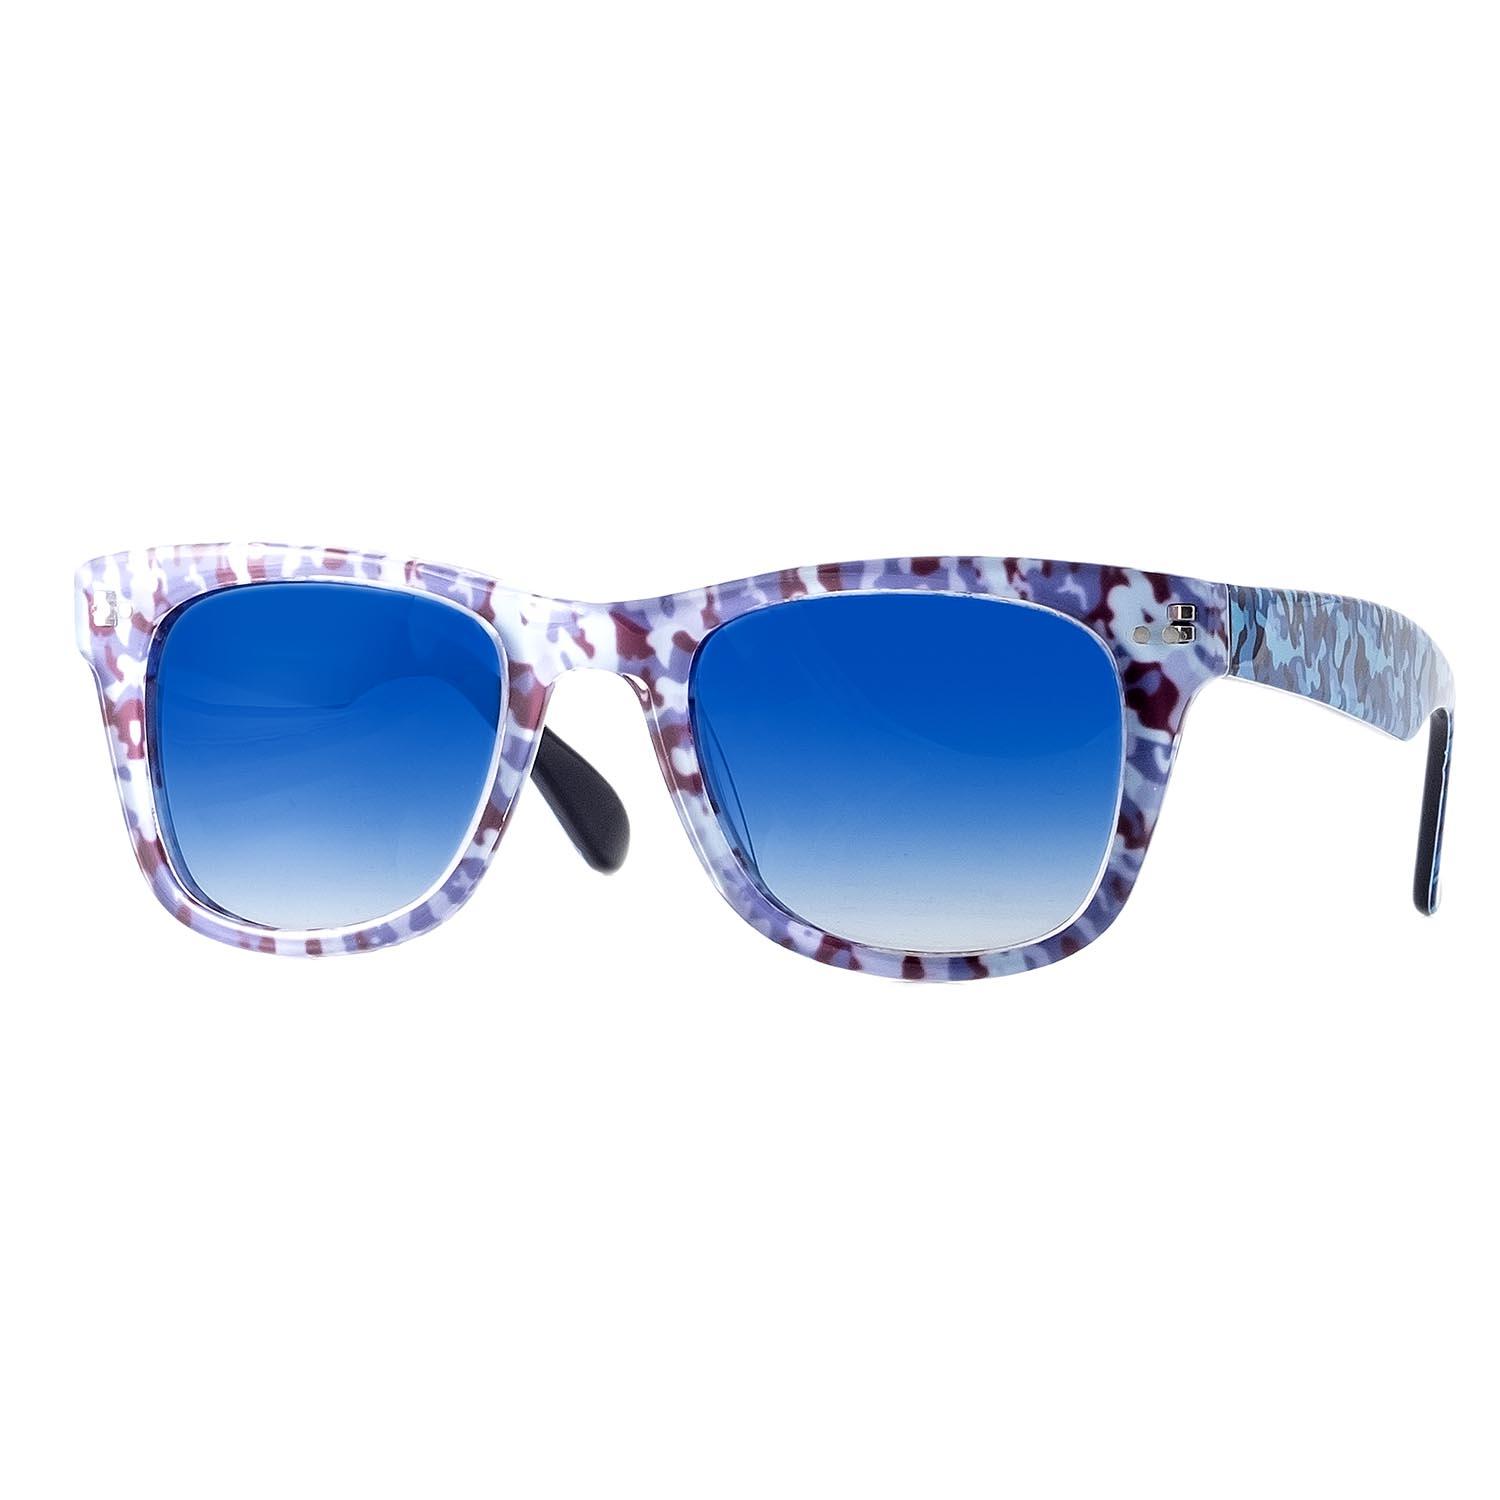 Gafas de sol polarizadas S1504 camuflaje azul